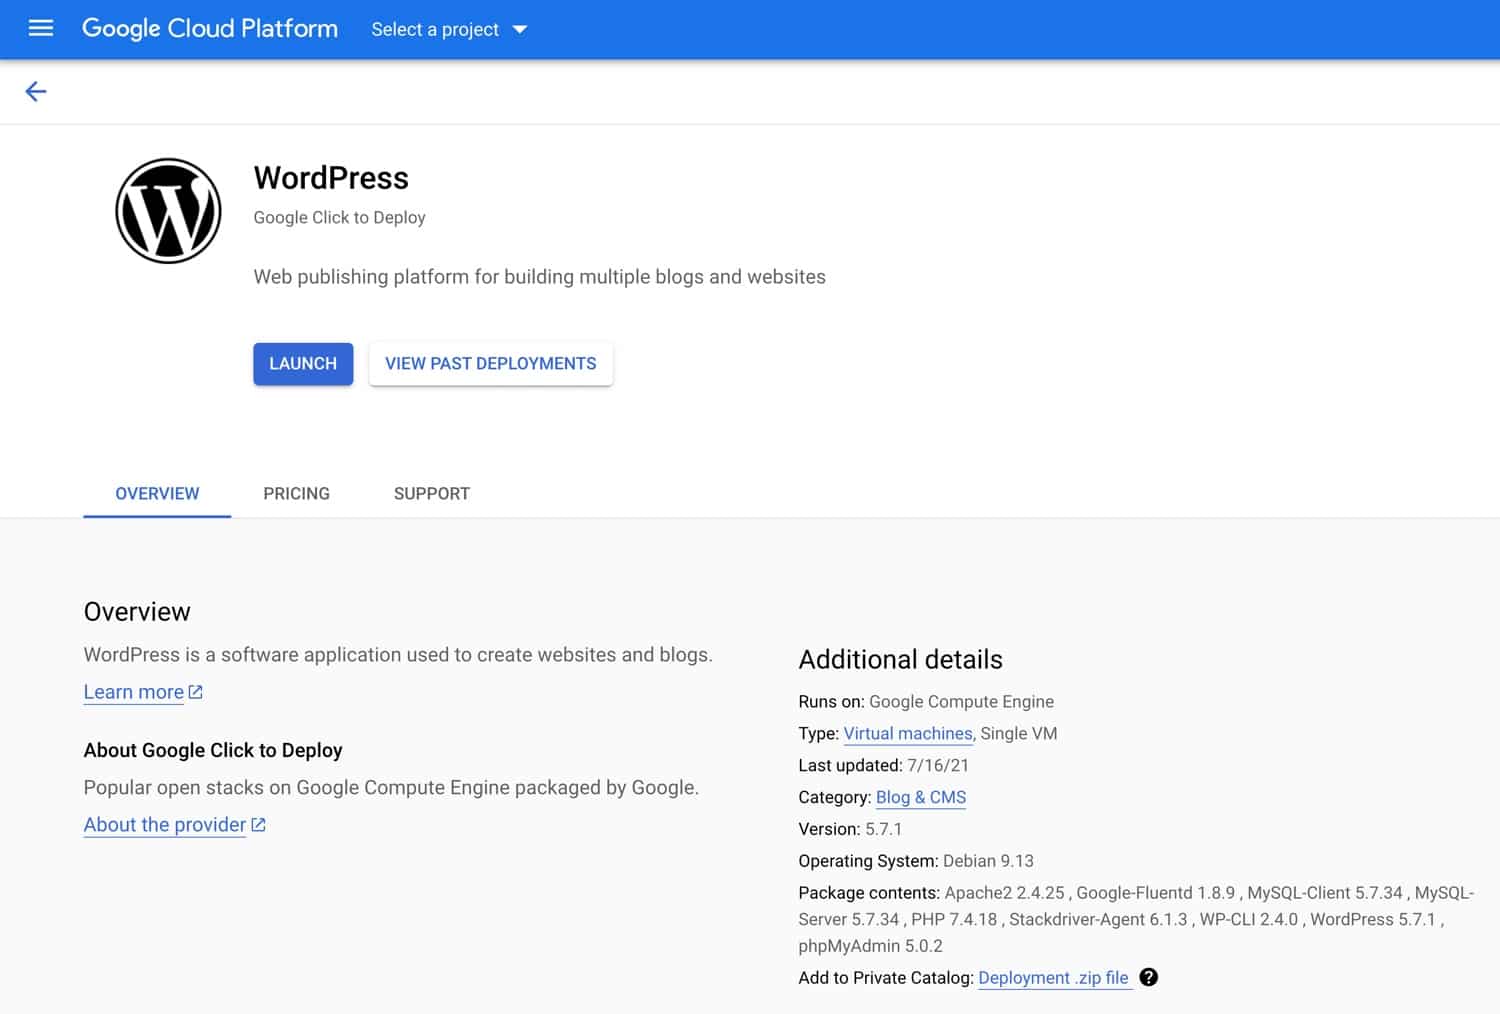 Deploy WordPress on Google Cloud Platform.